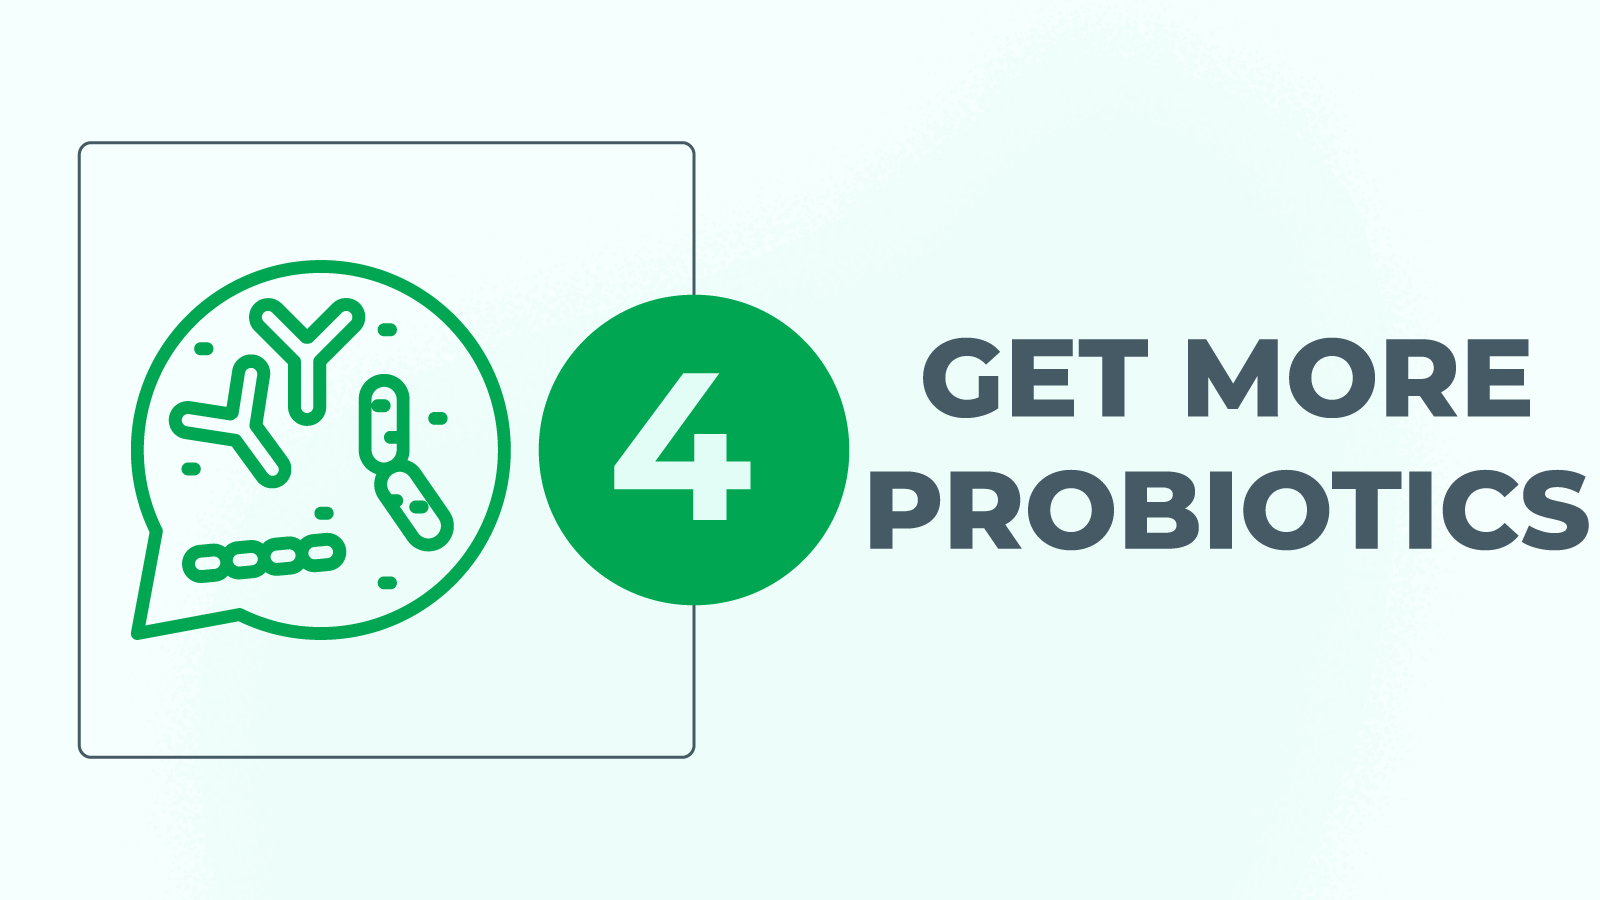 Get more probiotics - stop gambling addiction